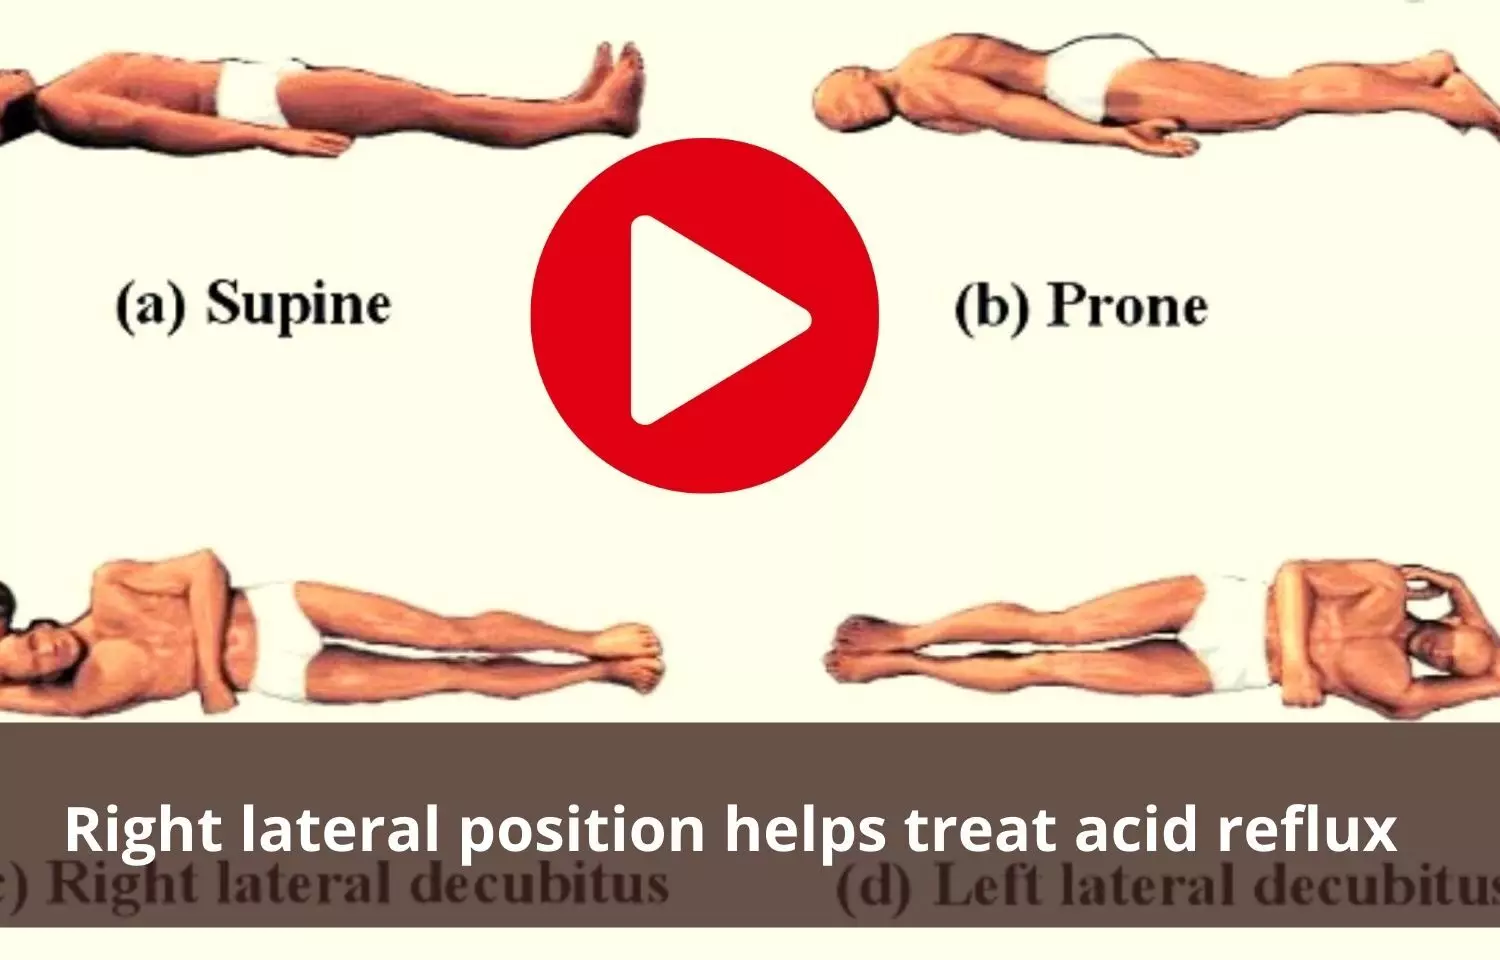 Proper sleeping position helps to treat acid reflux